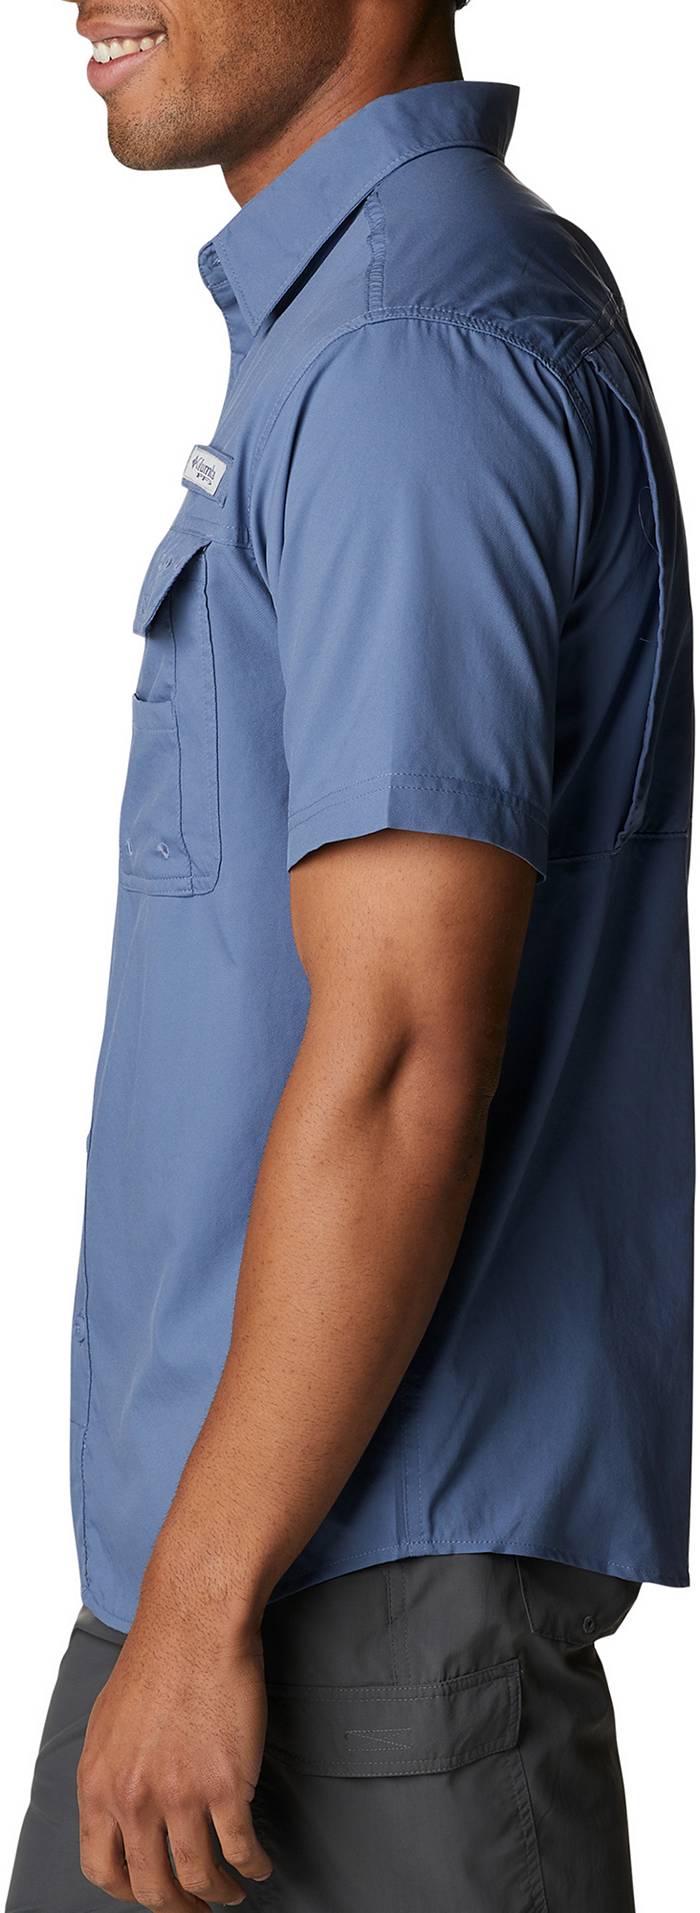 Columbia Skiff Guide Woven Long-Sleeve Shirt - Men's Carbon, L